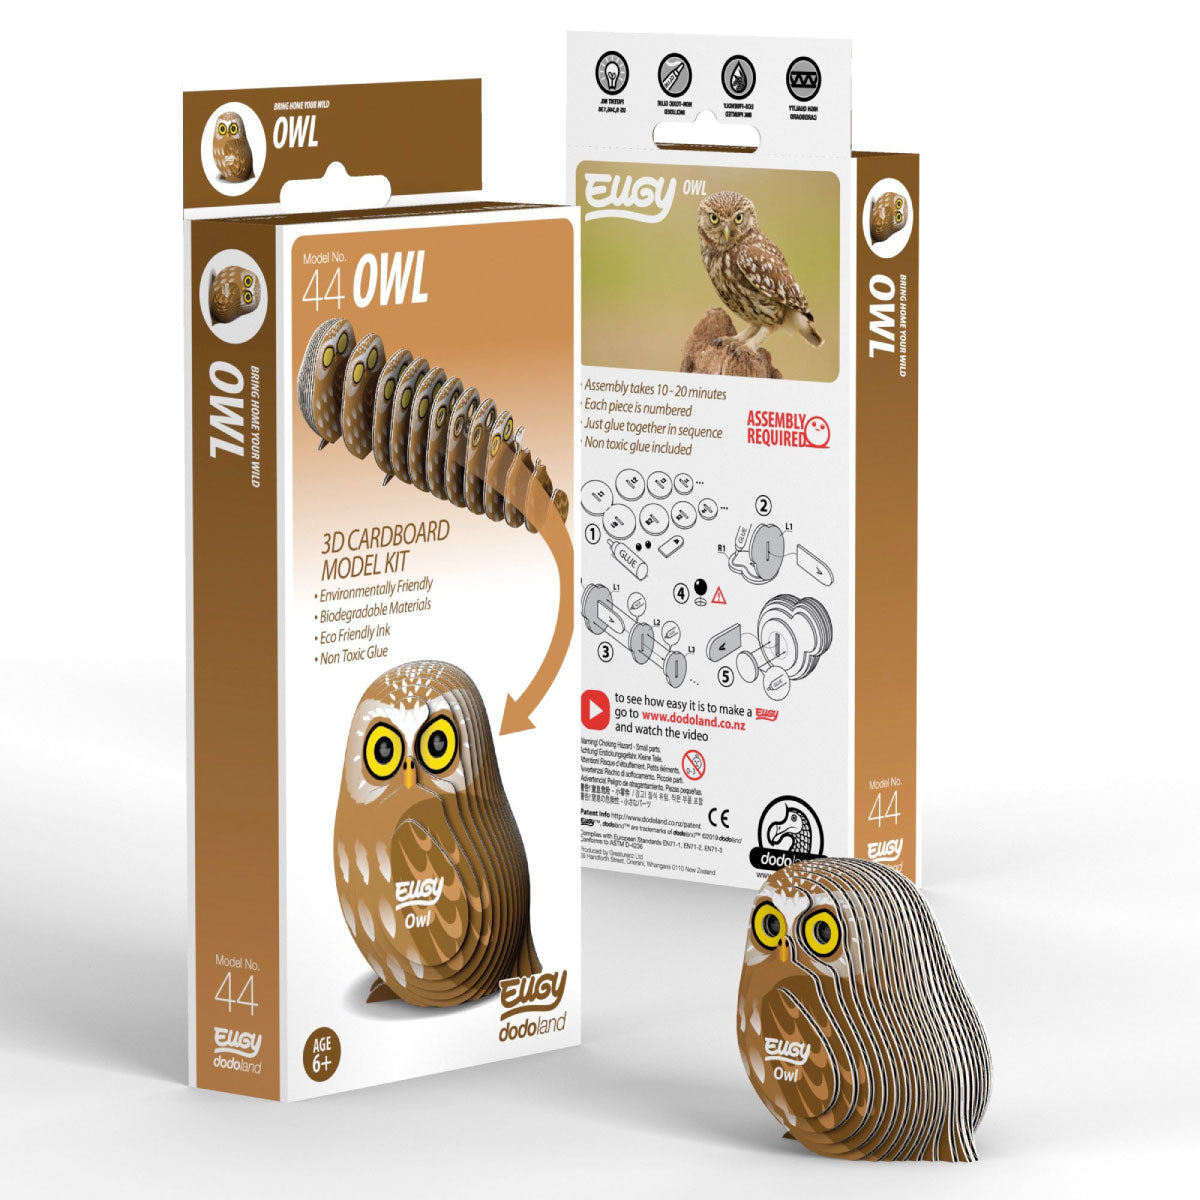 Eugy Owl 3-D Cardboard Model Kit